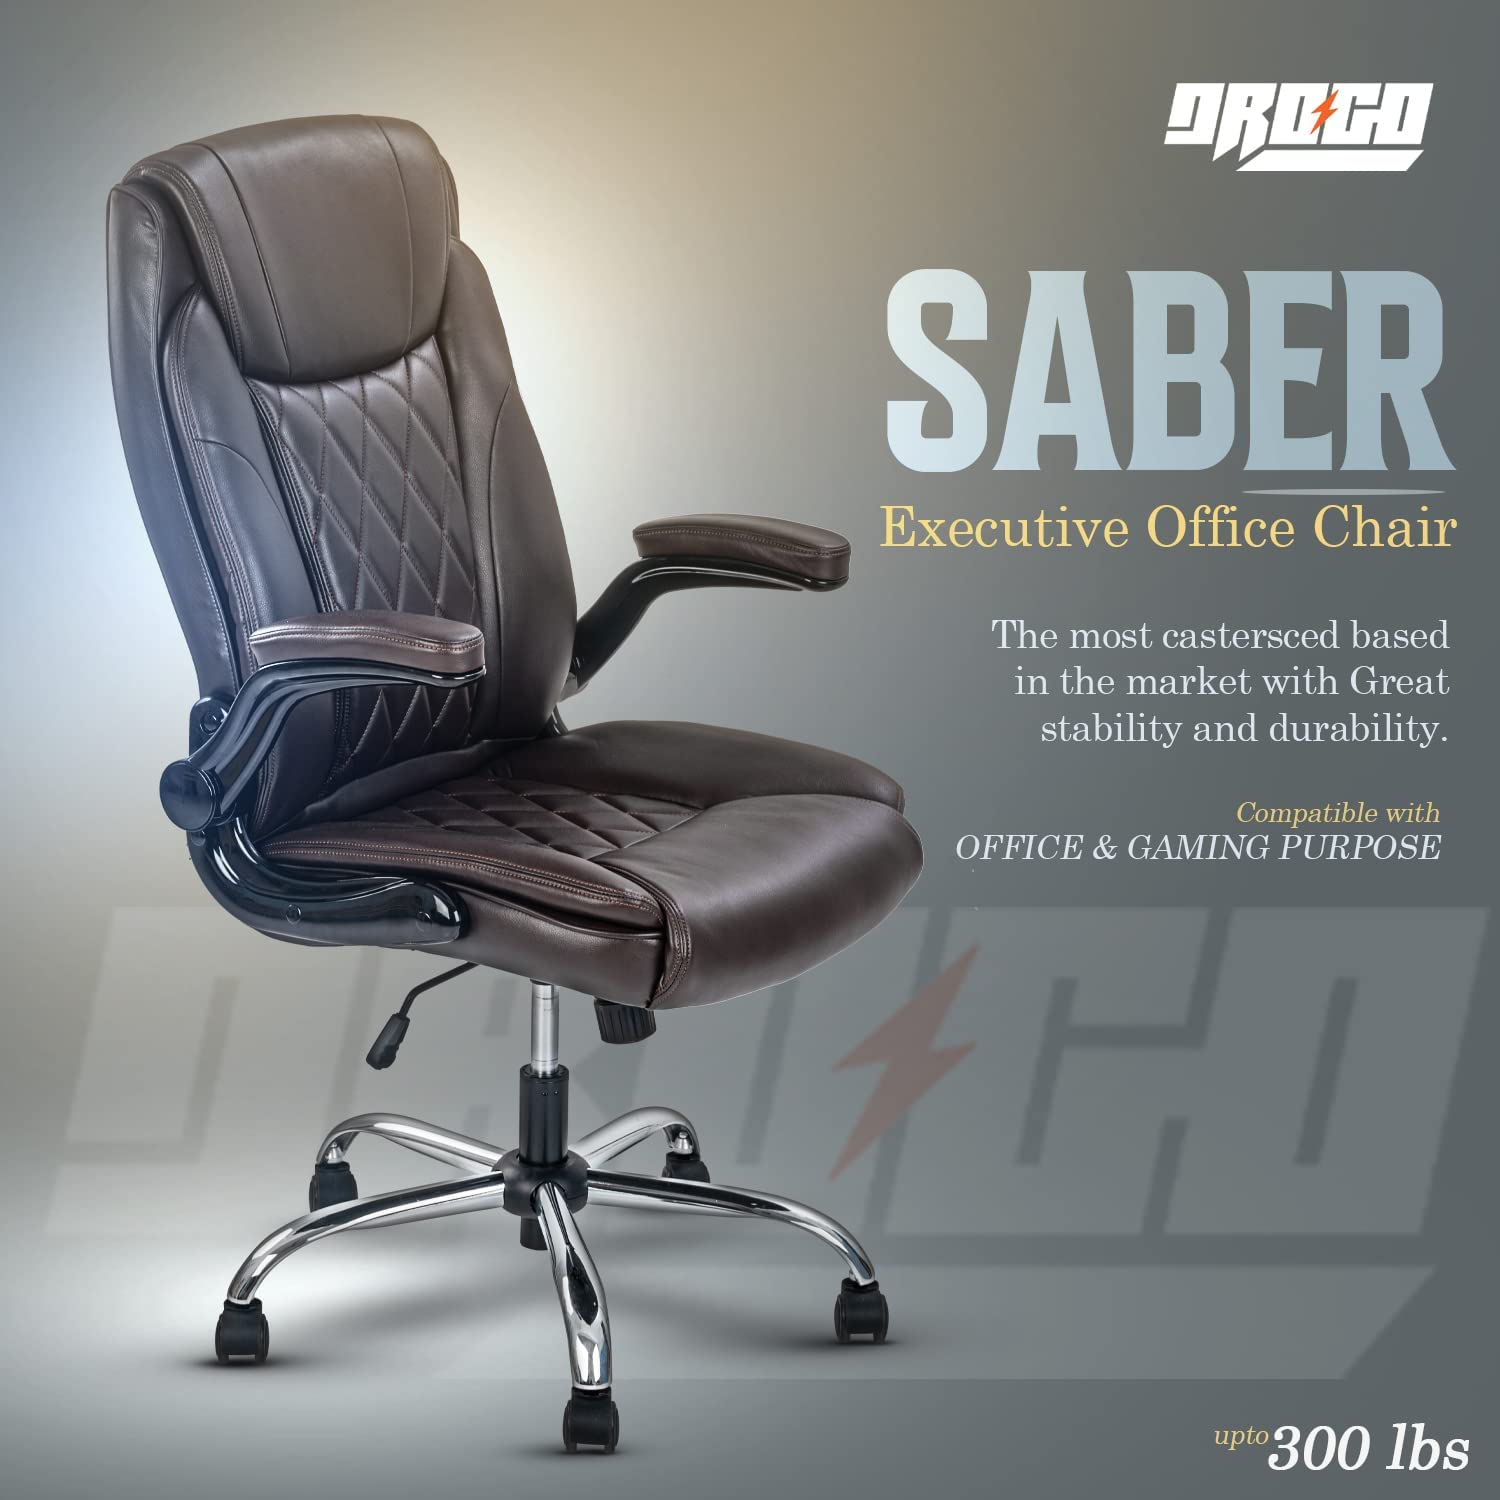 Drogo Saber Executive Office Chair